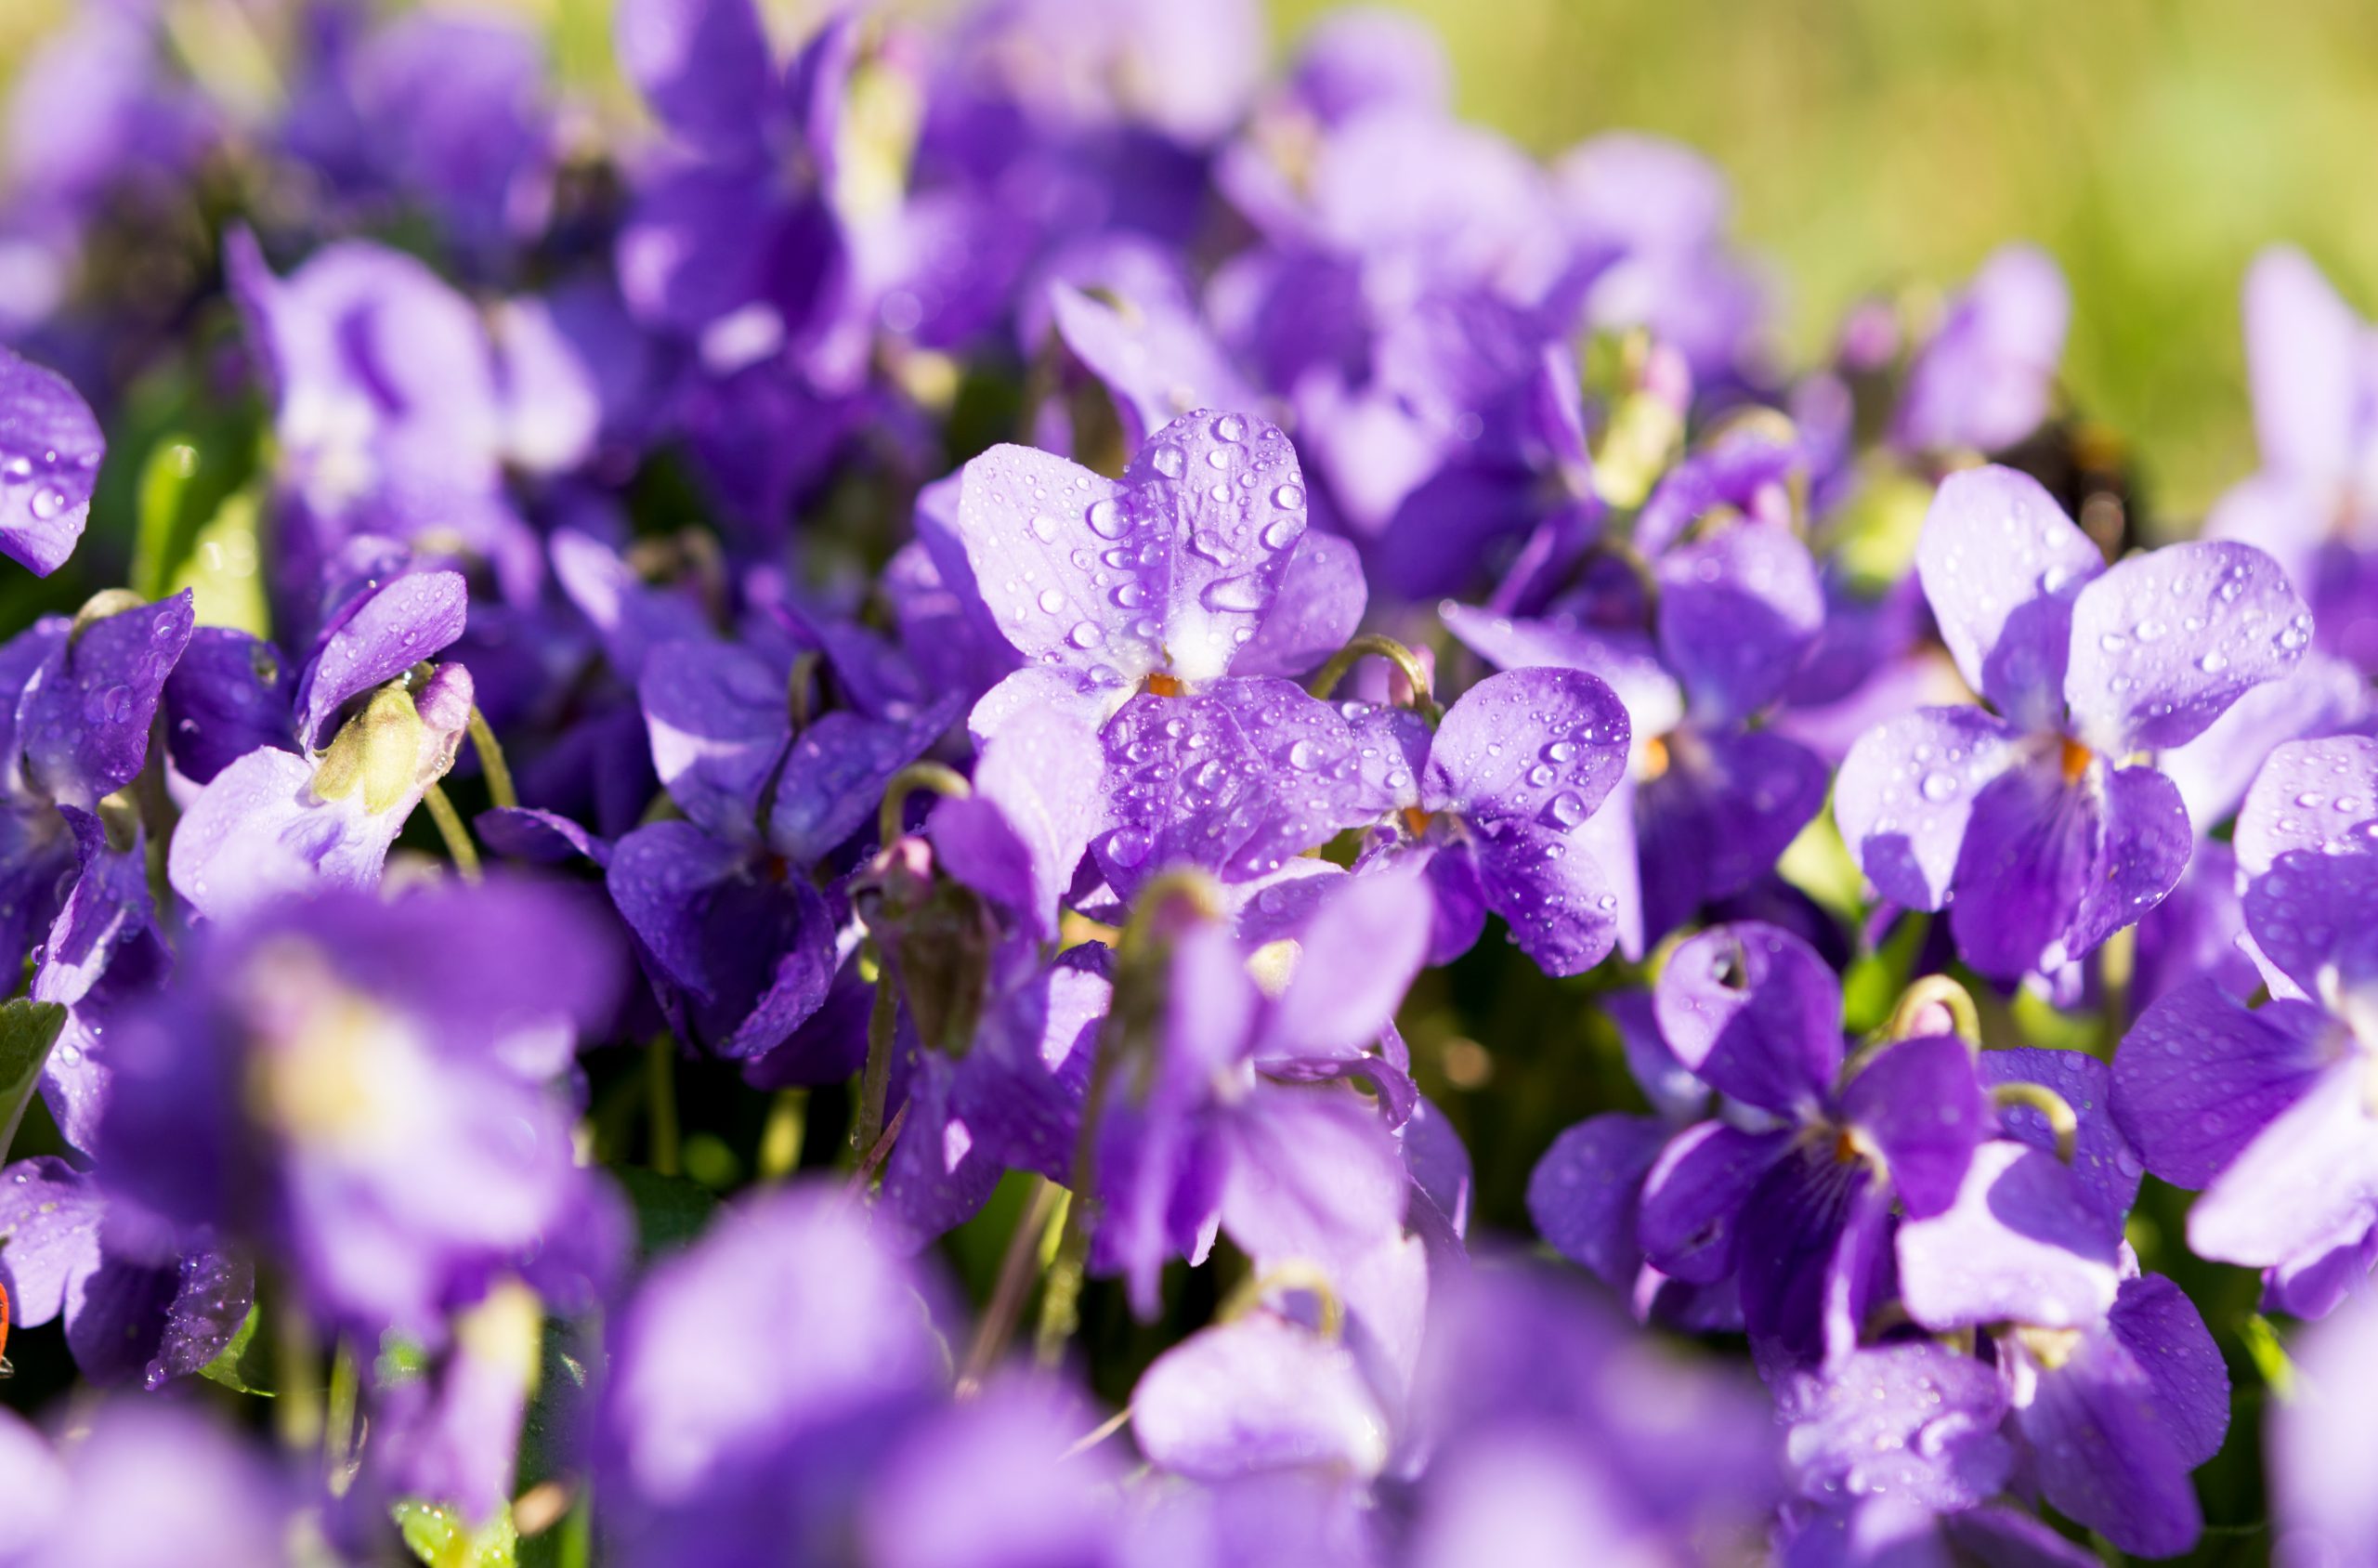 Herbal Focus: Violets <span class="latin">(Viola spp.)</span>